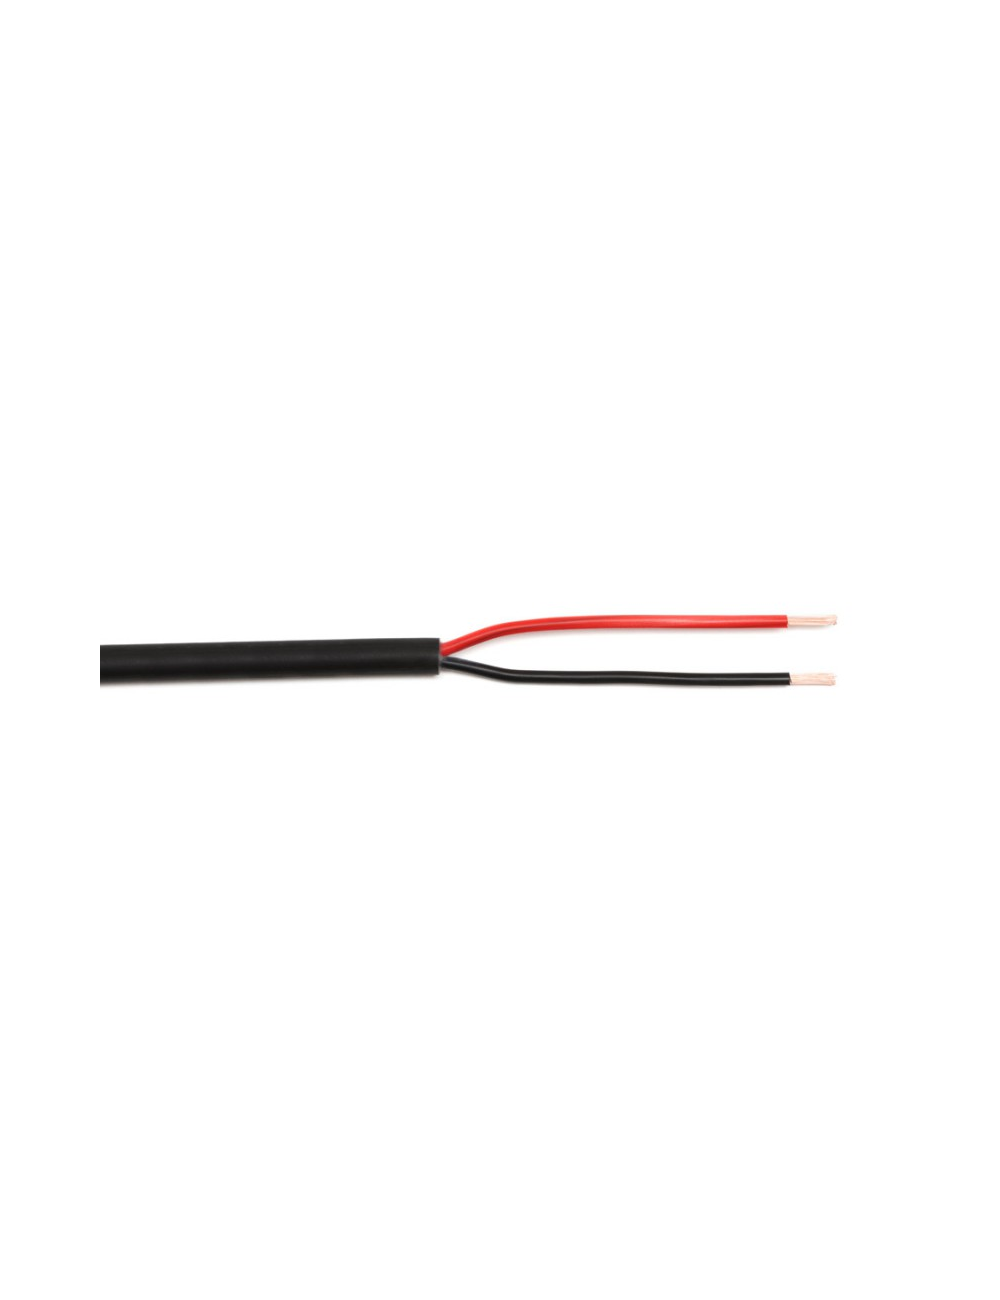 HP cable 2x1.5mm2 (per meter)